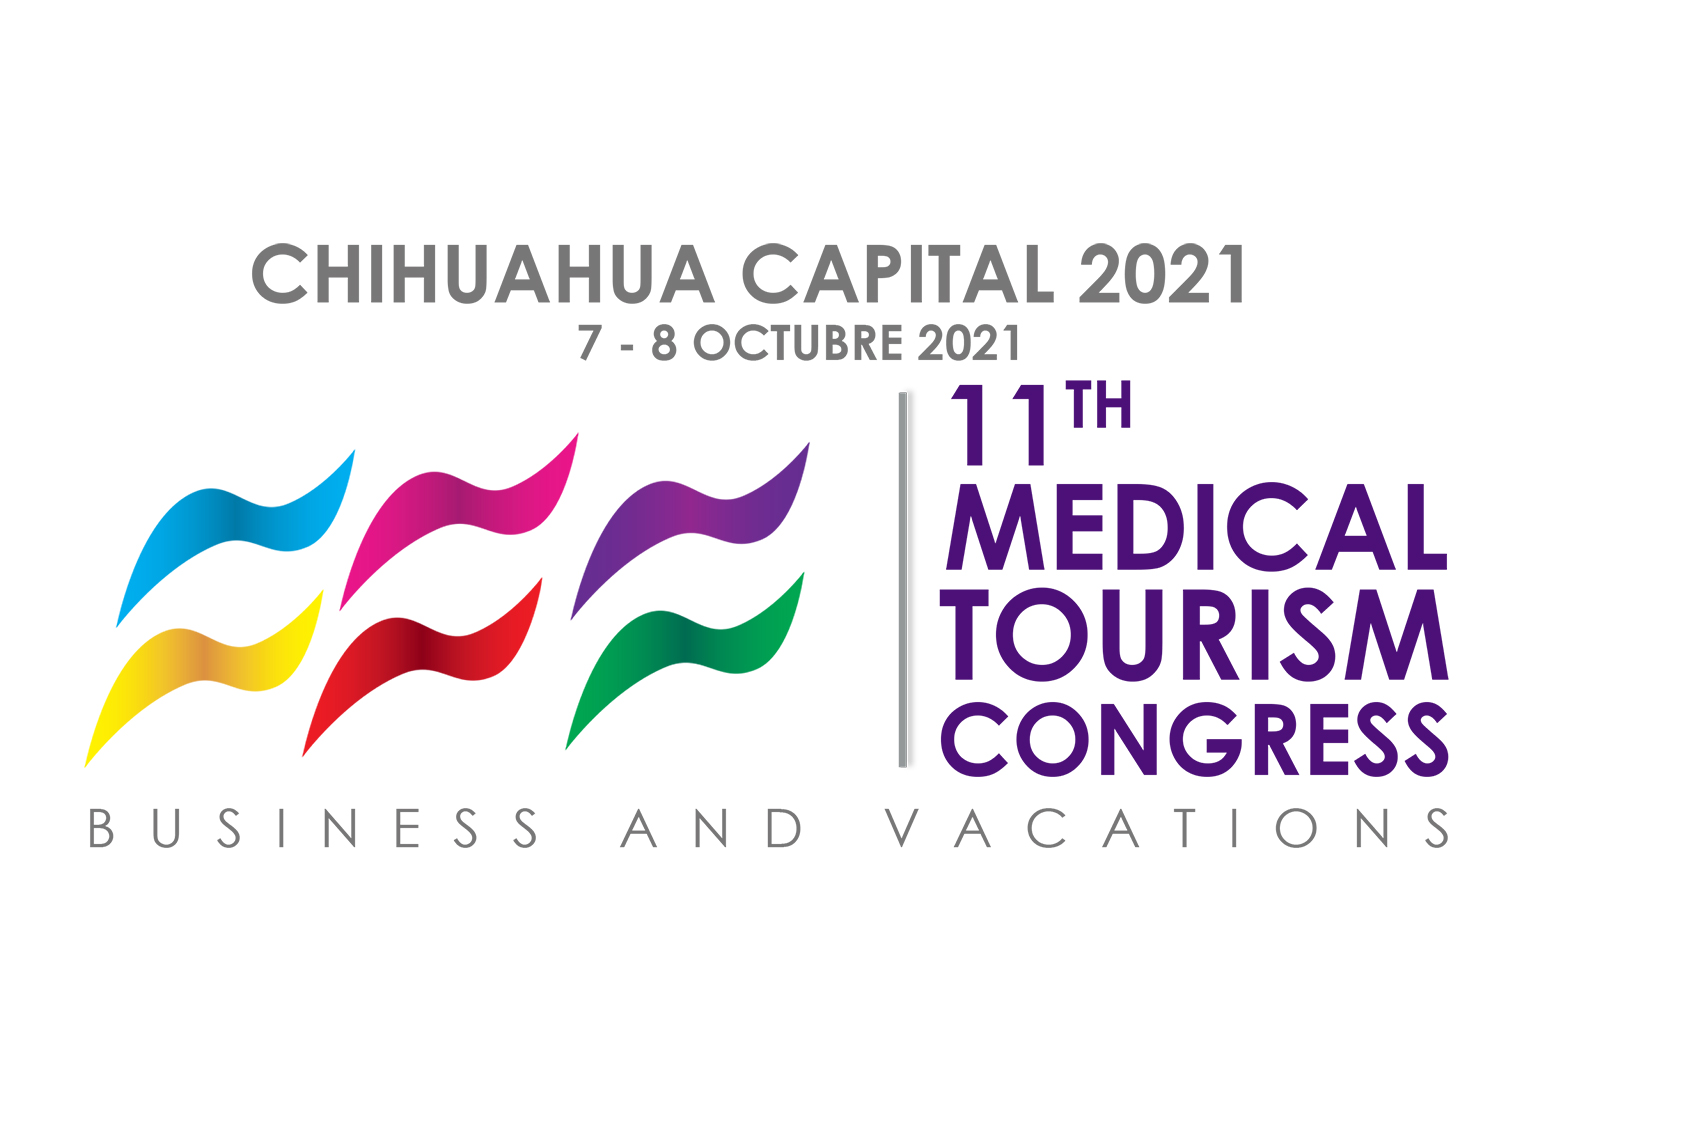 Congreso-Turism-Medico-Chihuahua